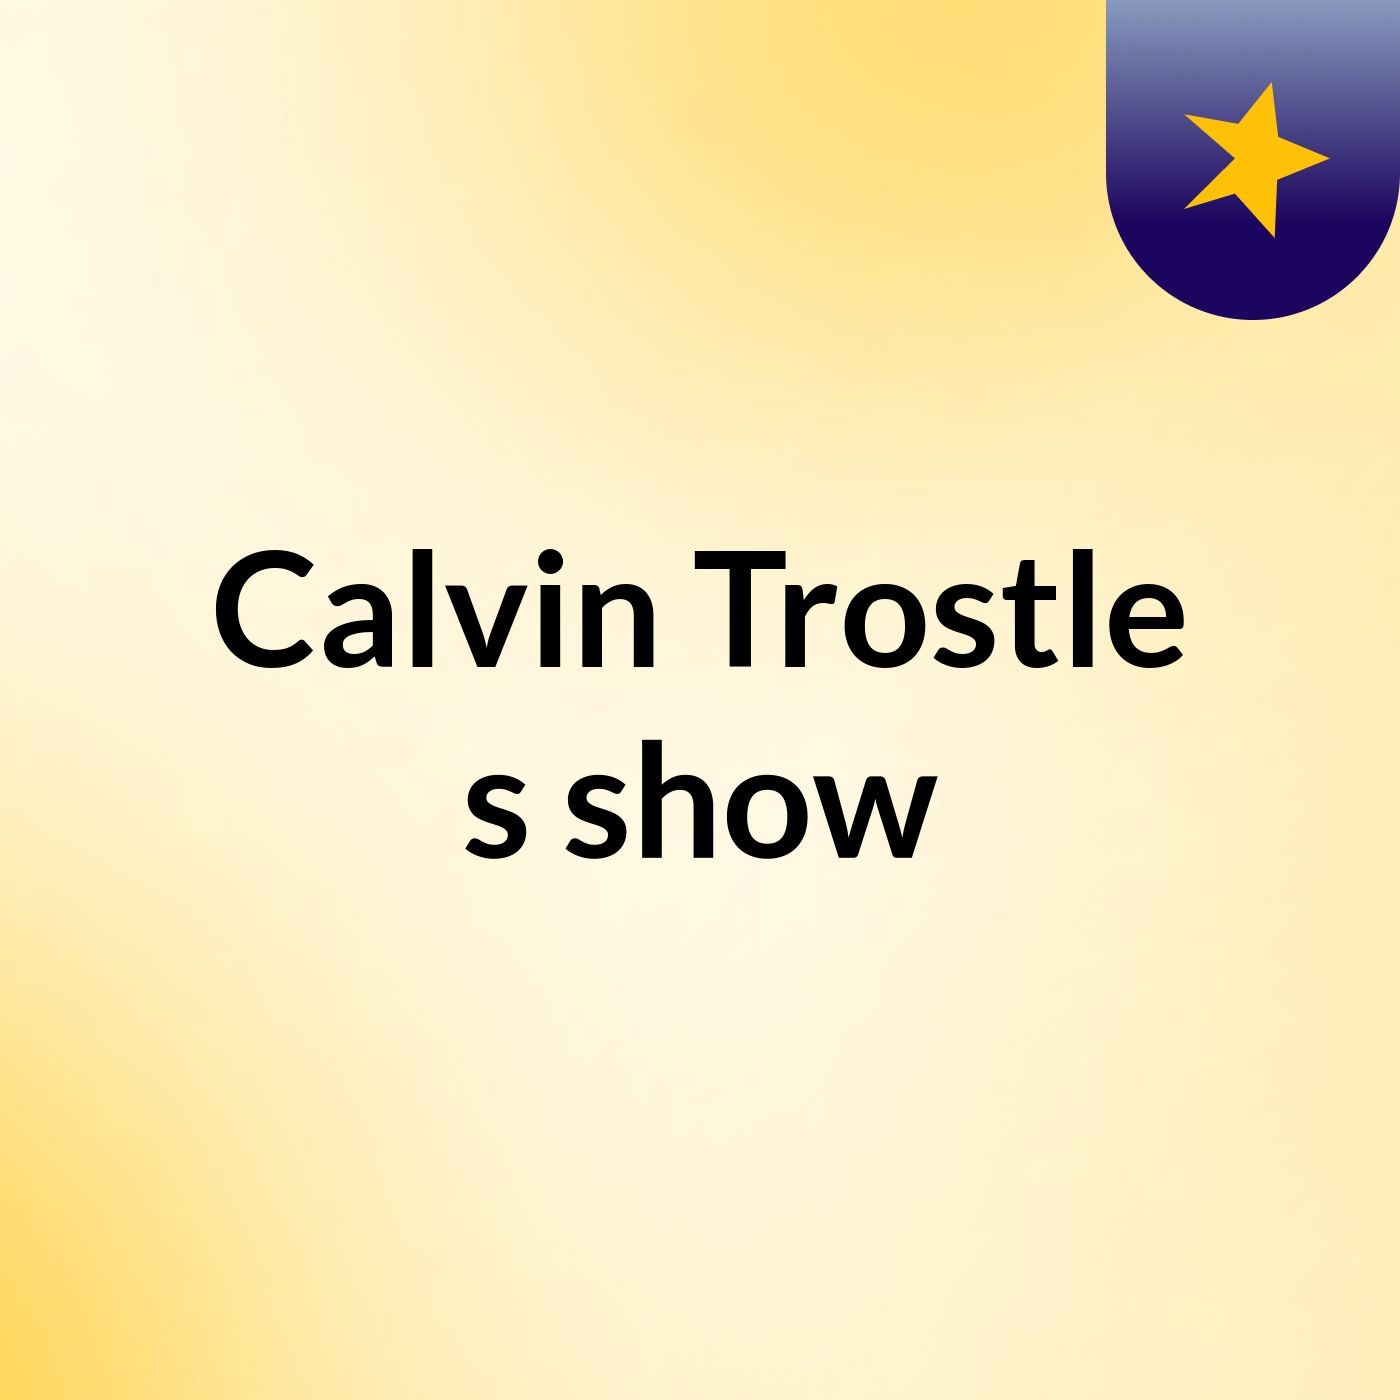 Calvin Trostle's show